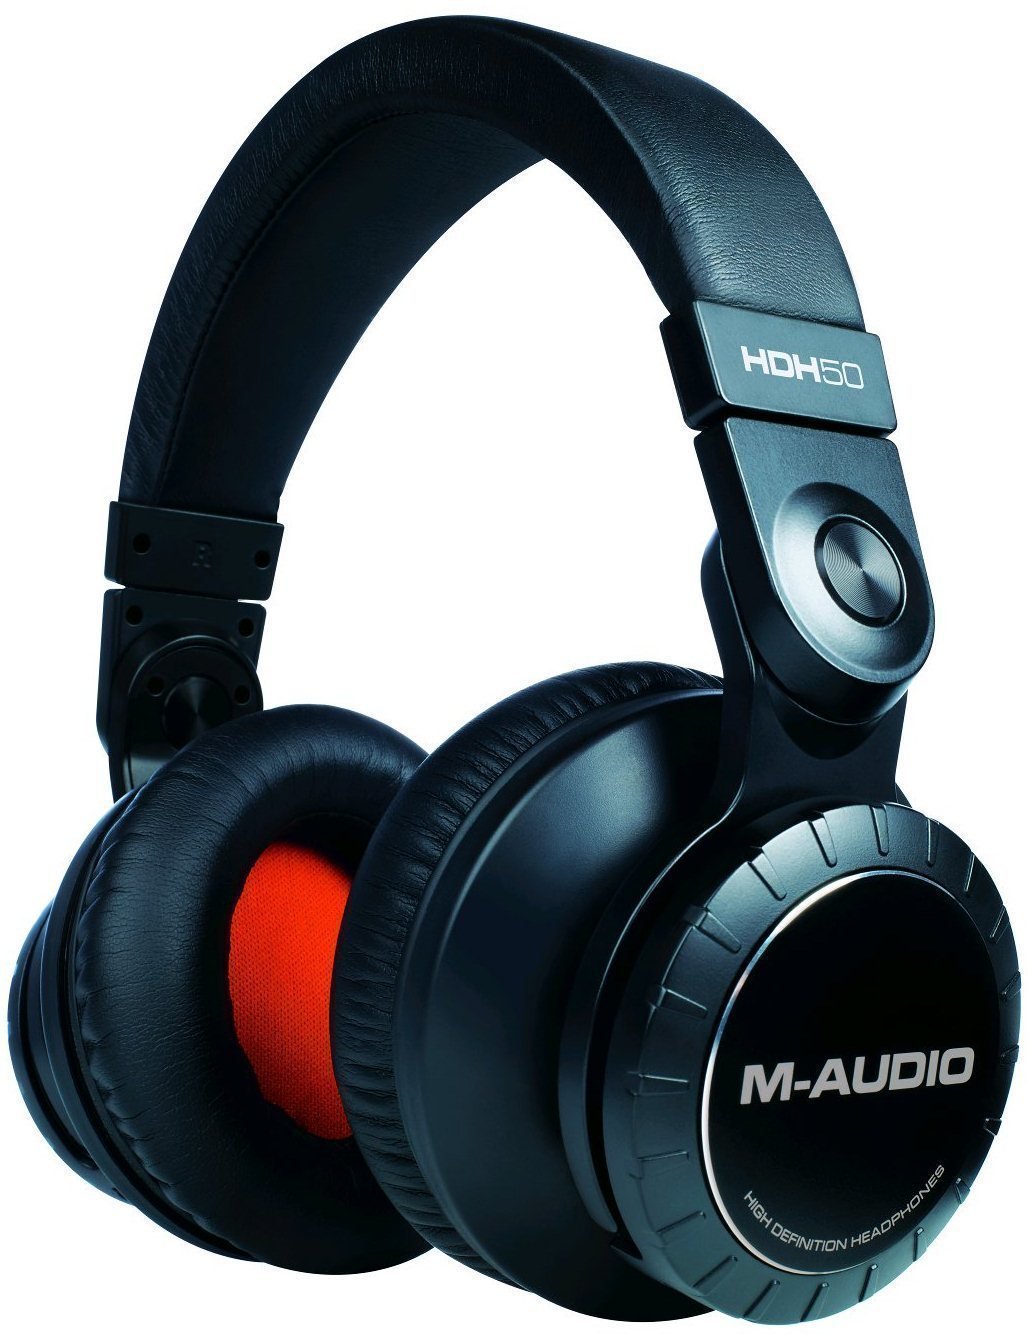 Studio-kuulokkeet M-Audio HDH50 High Definition Headphones